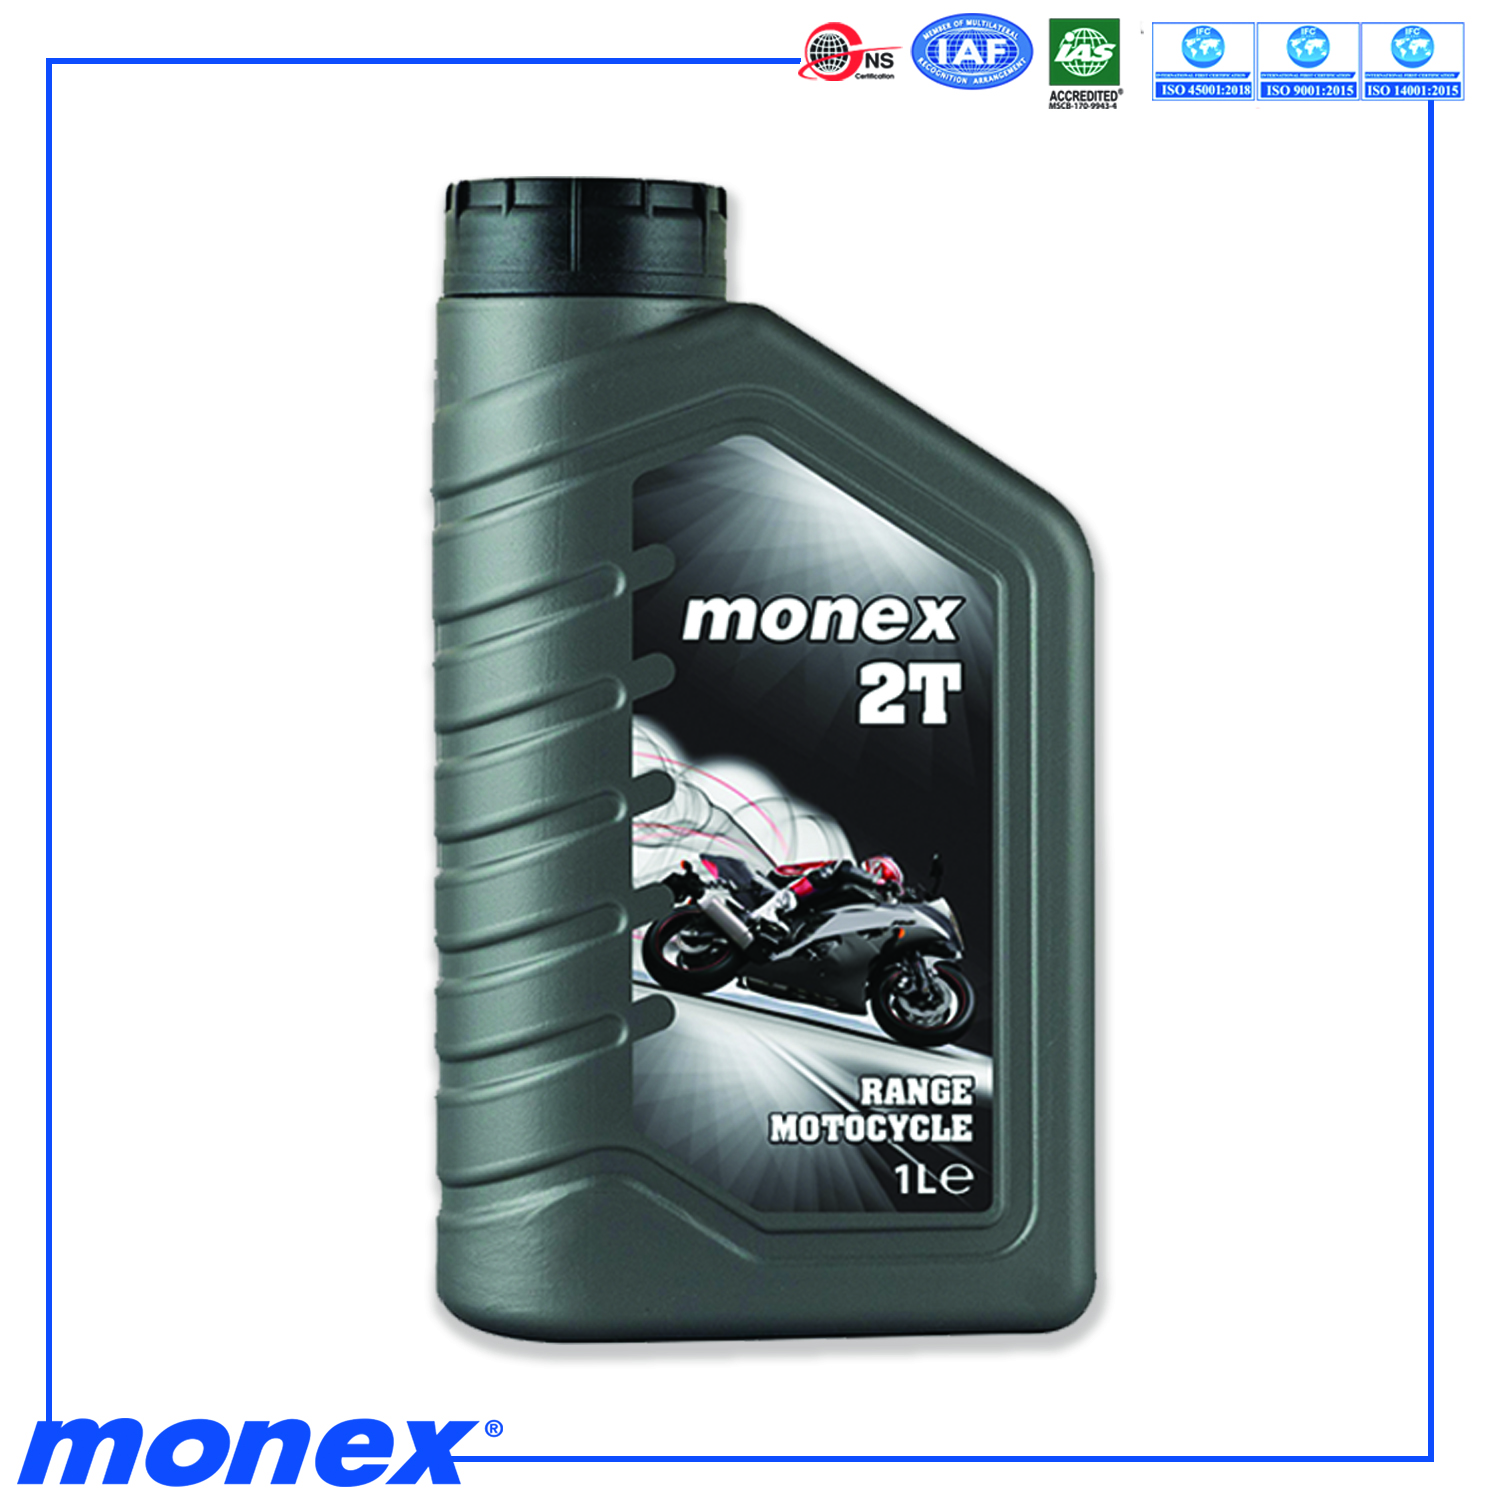 Monex 2T